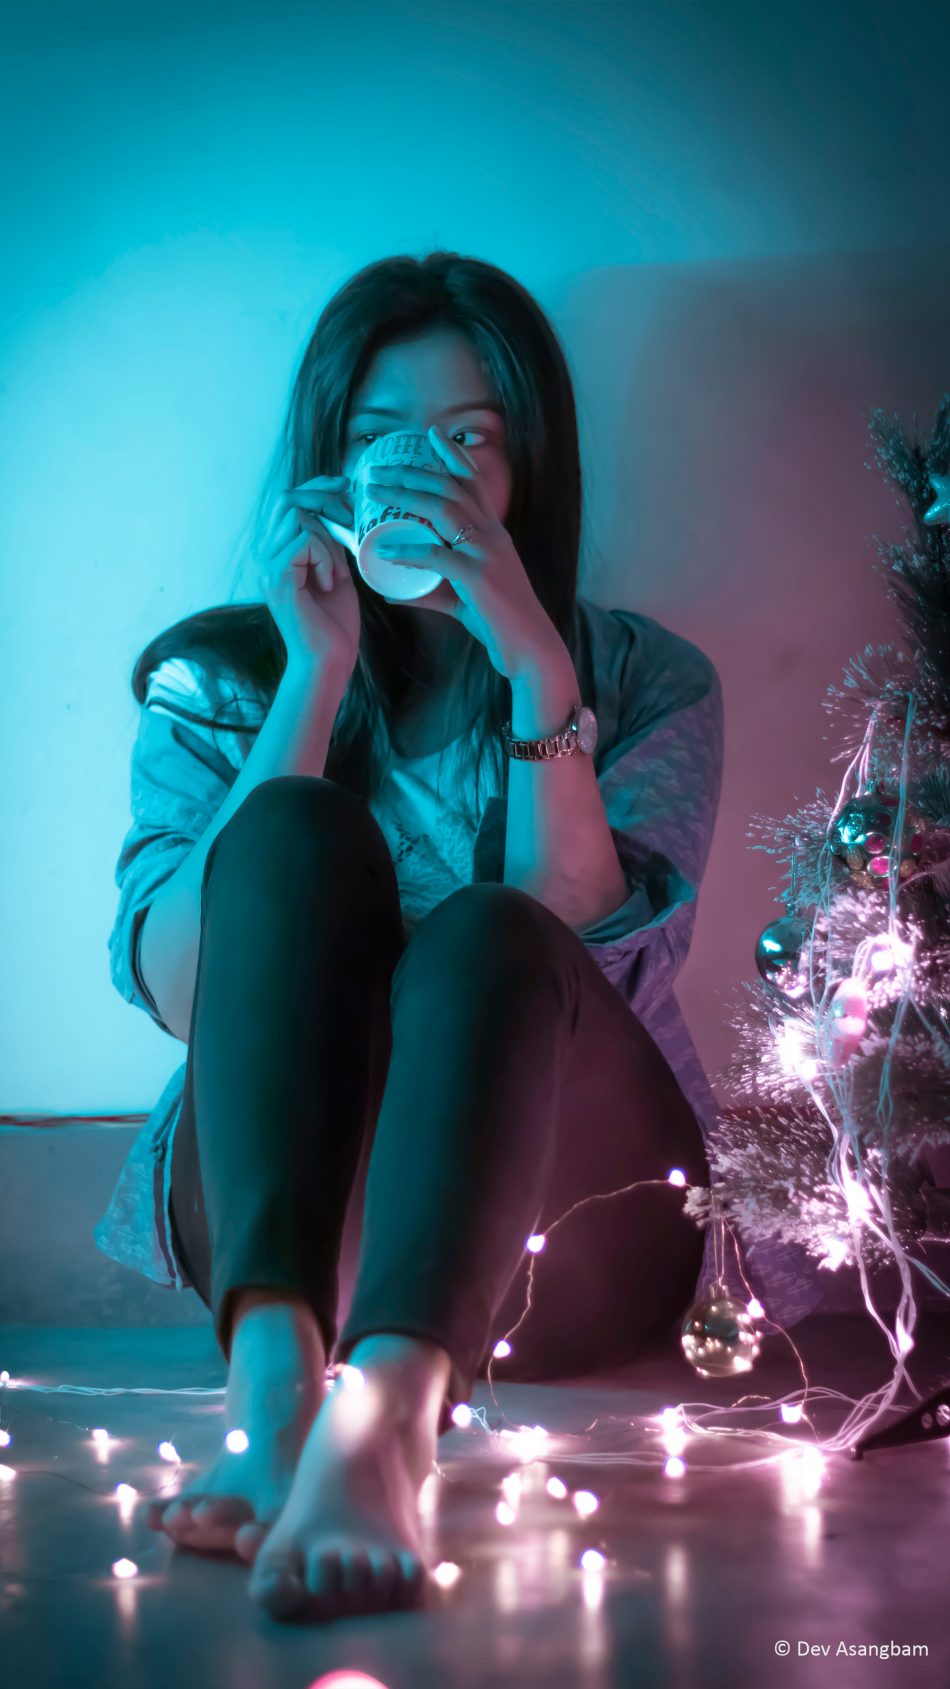 Cute Girl Coffee Lights Christmas Tree Photography 4K Ultra HD Mobile Wallpaper